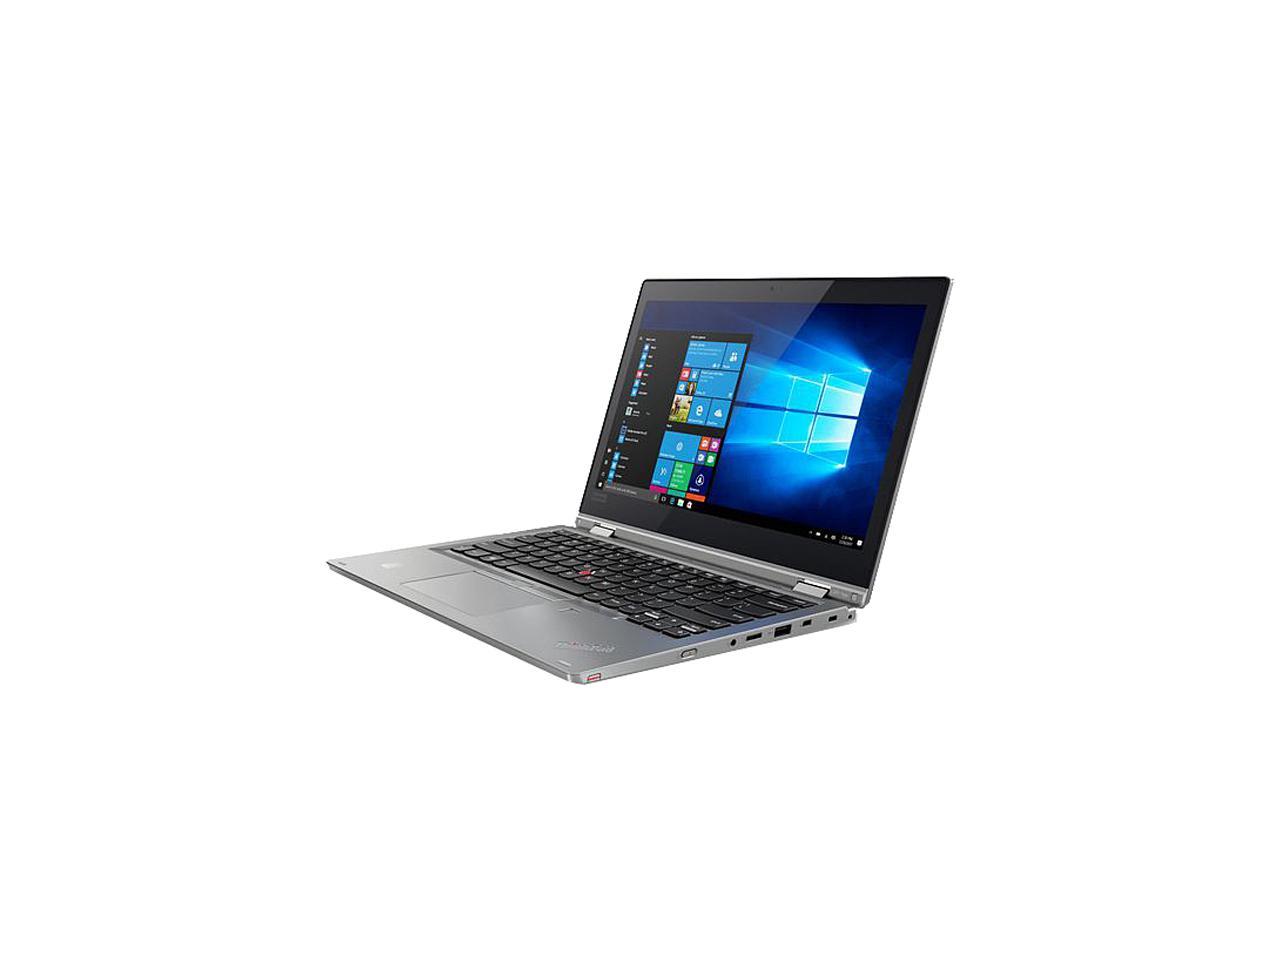 Lenovo ThinkPad L380 Yoga 20M7000KUS Intel Core i5 8th Gen 8250U (1.60 GHz) 8 GB Memory 256 GB SSD Intel UHD Graphics 620 13.3" Touchscreen 1920 x 1080 Convertible 2-in-1 Laptop Windows 10 Pro 64-Bit